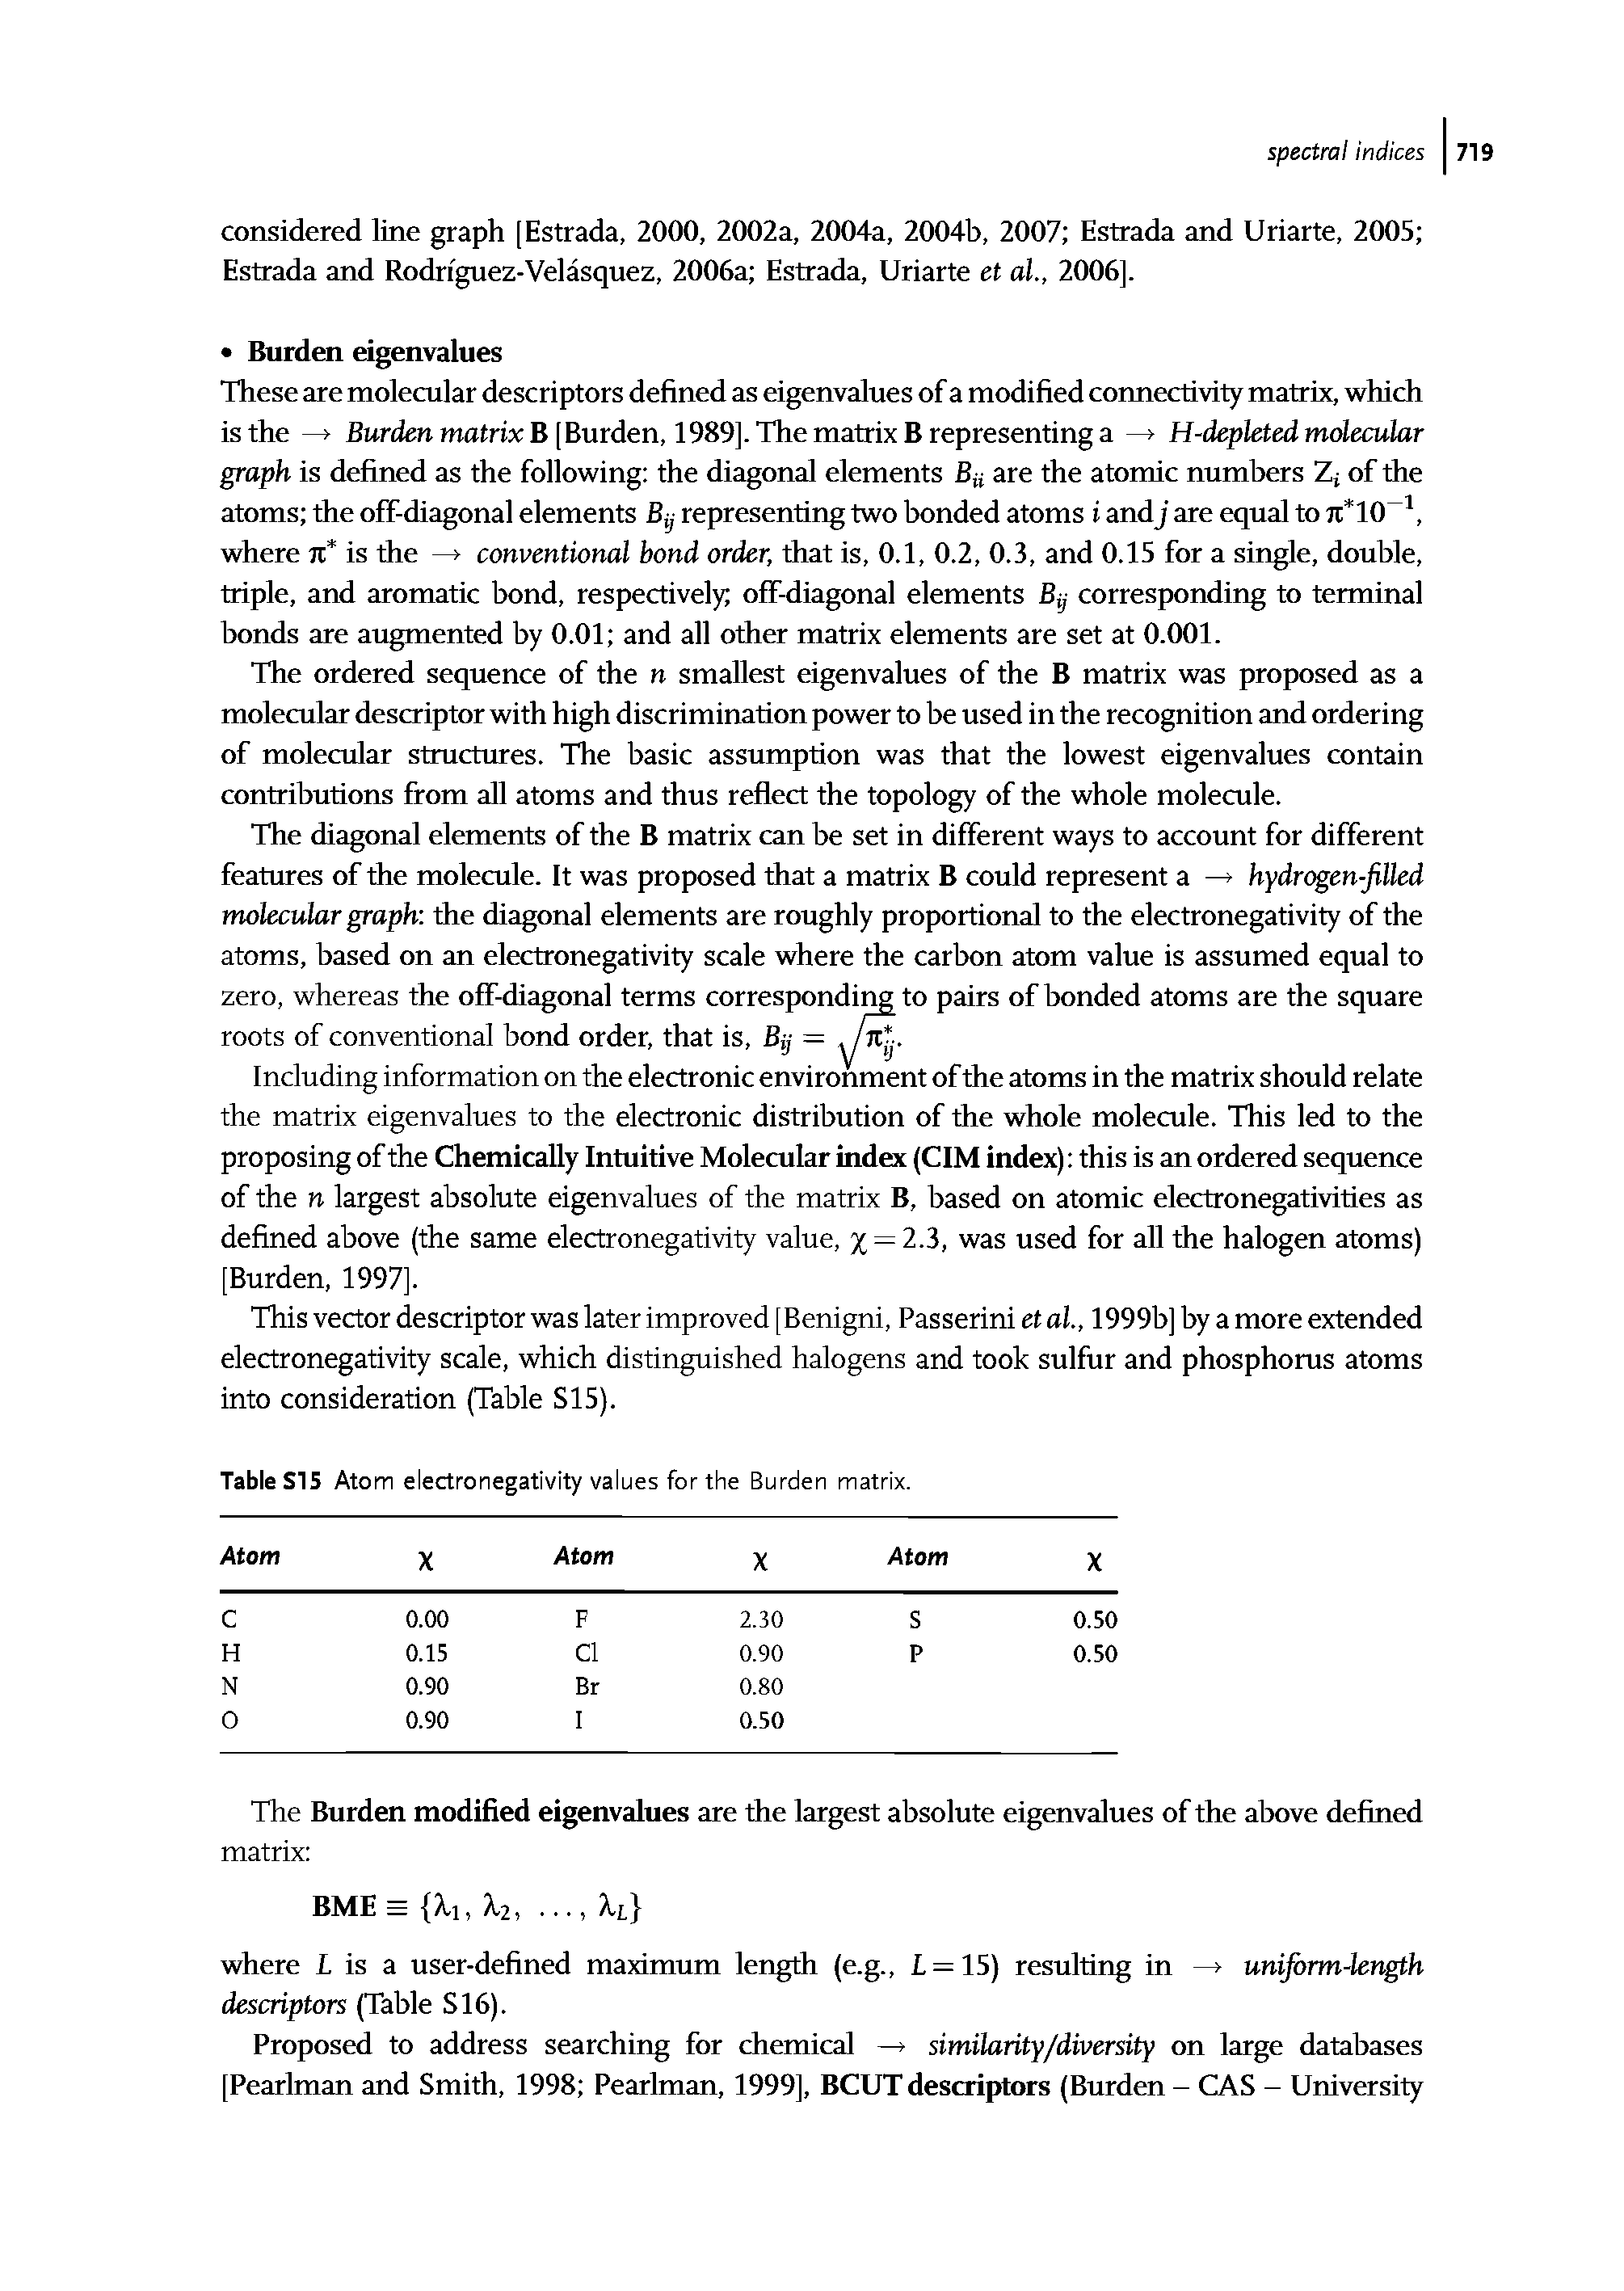 Table SIS Atom electronegativity values for the Burden matrix.